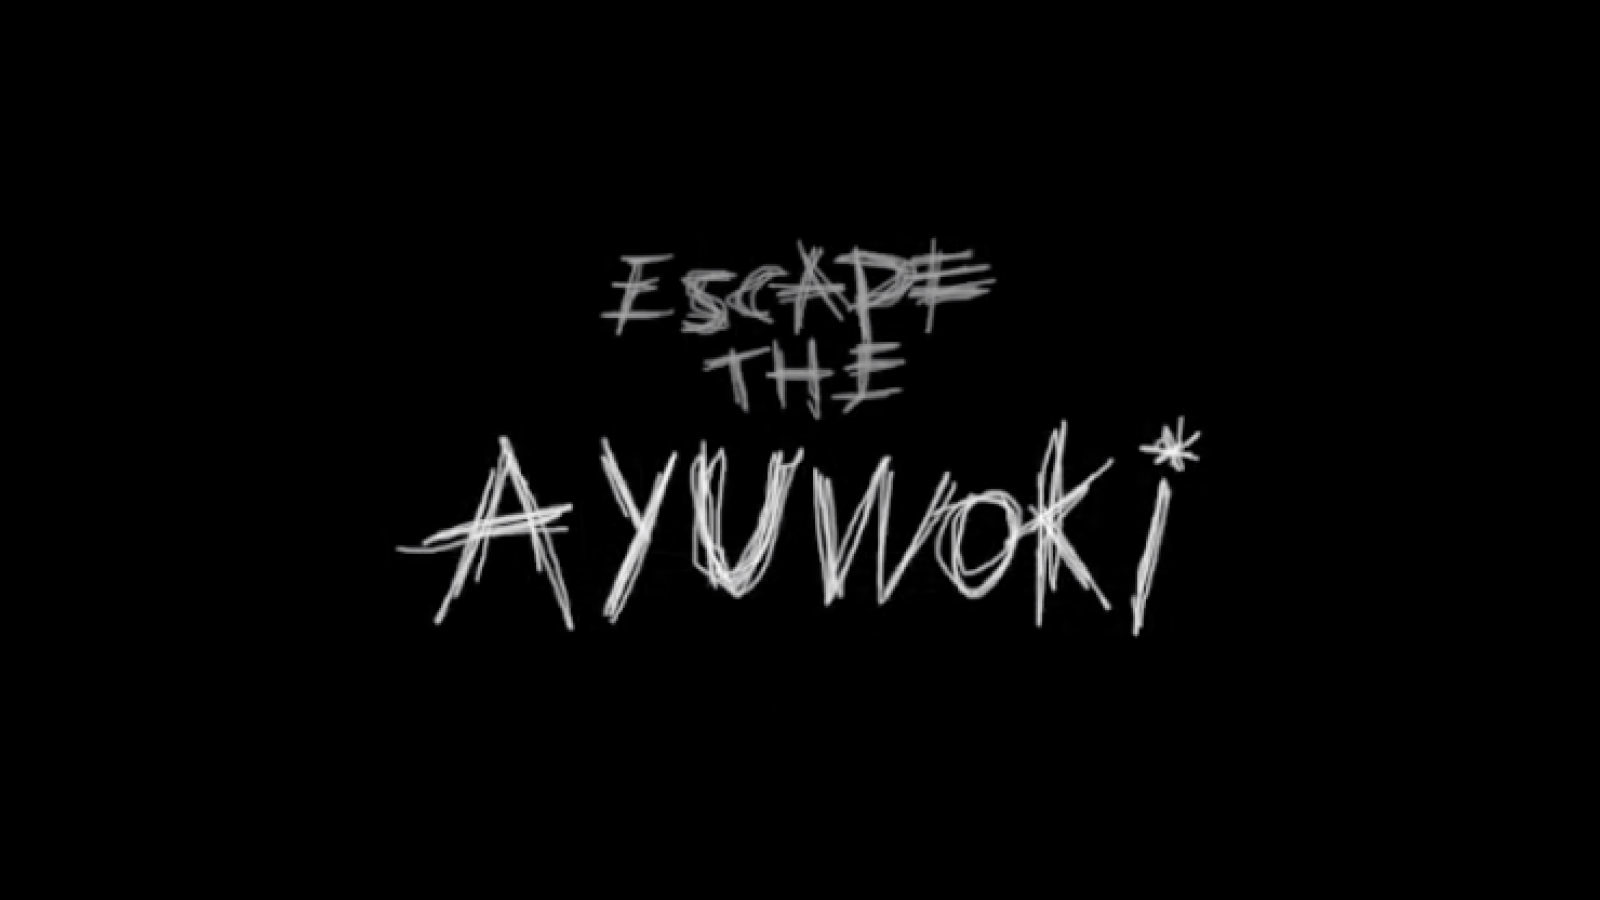 Escape the ayuwoki в стиме фото 27